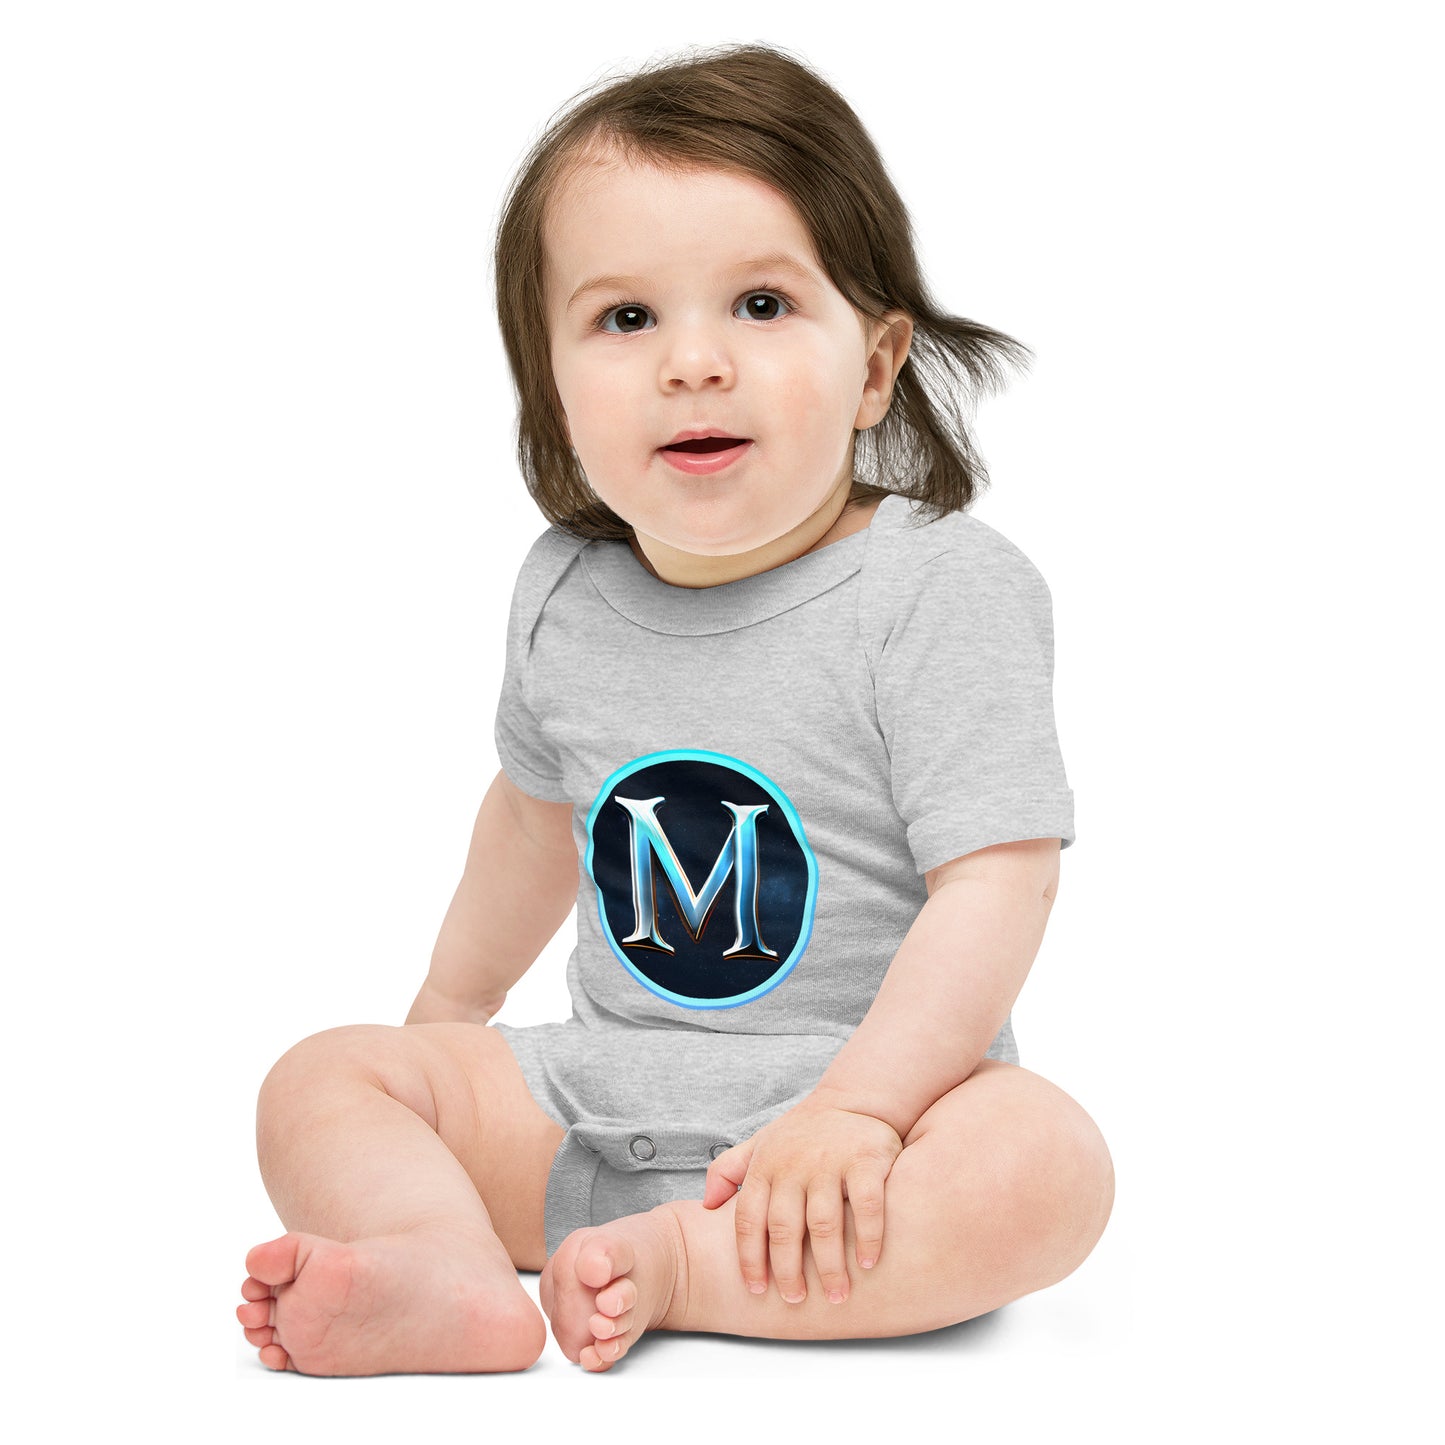 Medivia Star M Baby Bodysuit